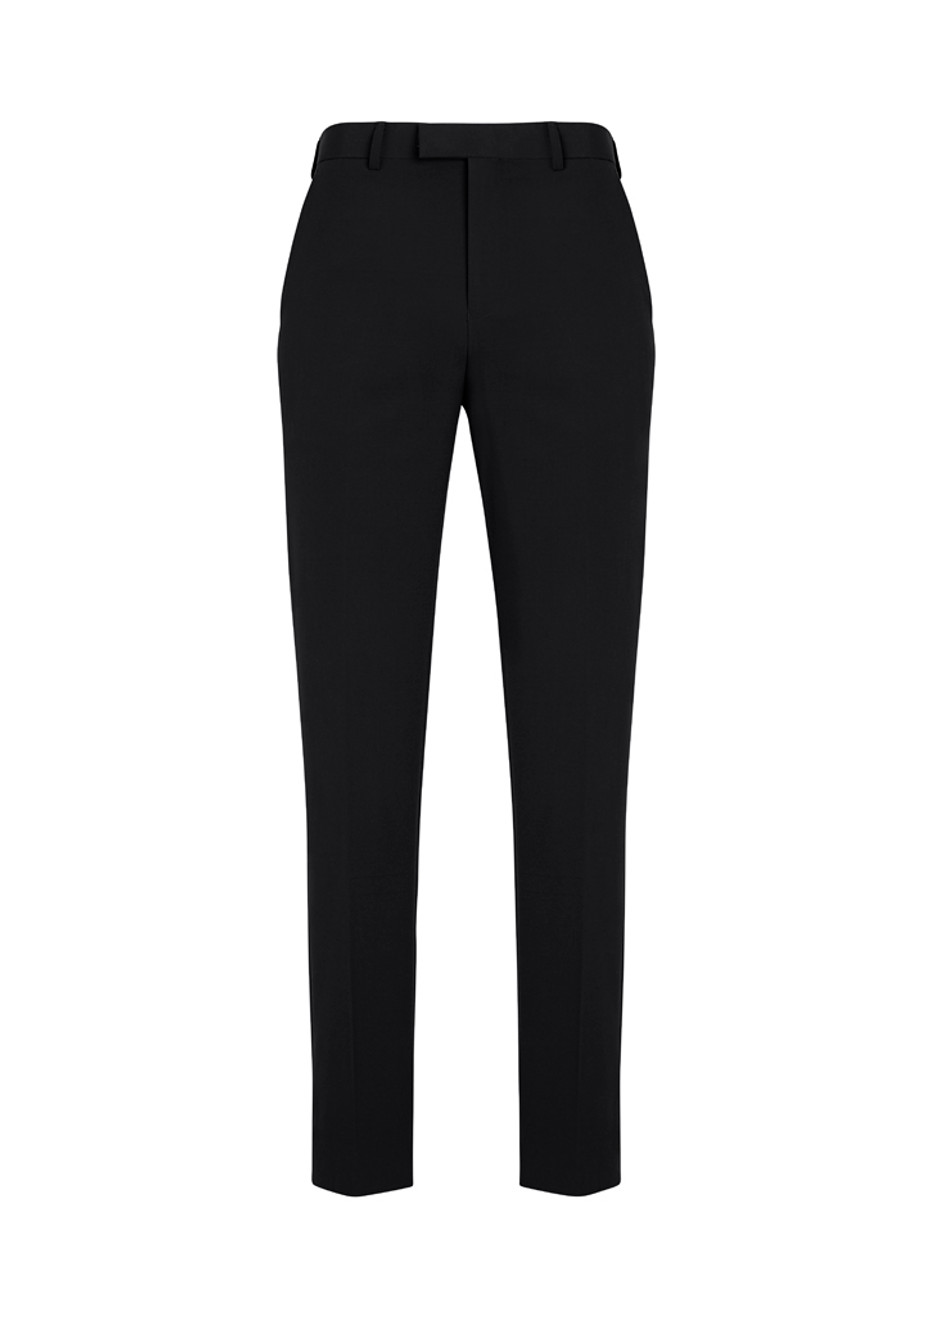 Biz Corporates 70716R MEN'S Slim Fit Flat Front Pant Regular | Available Colours: Black, Slate, Marine